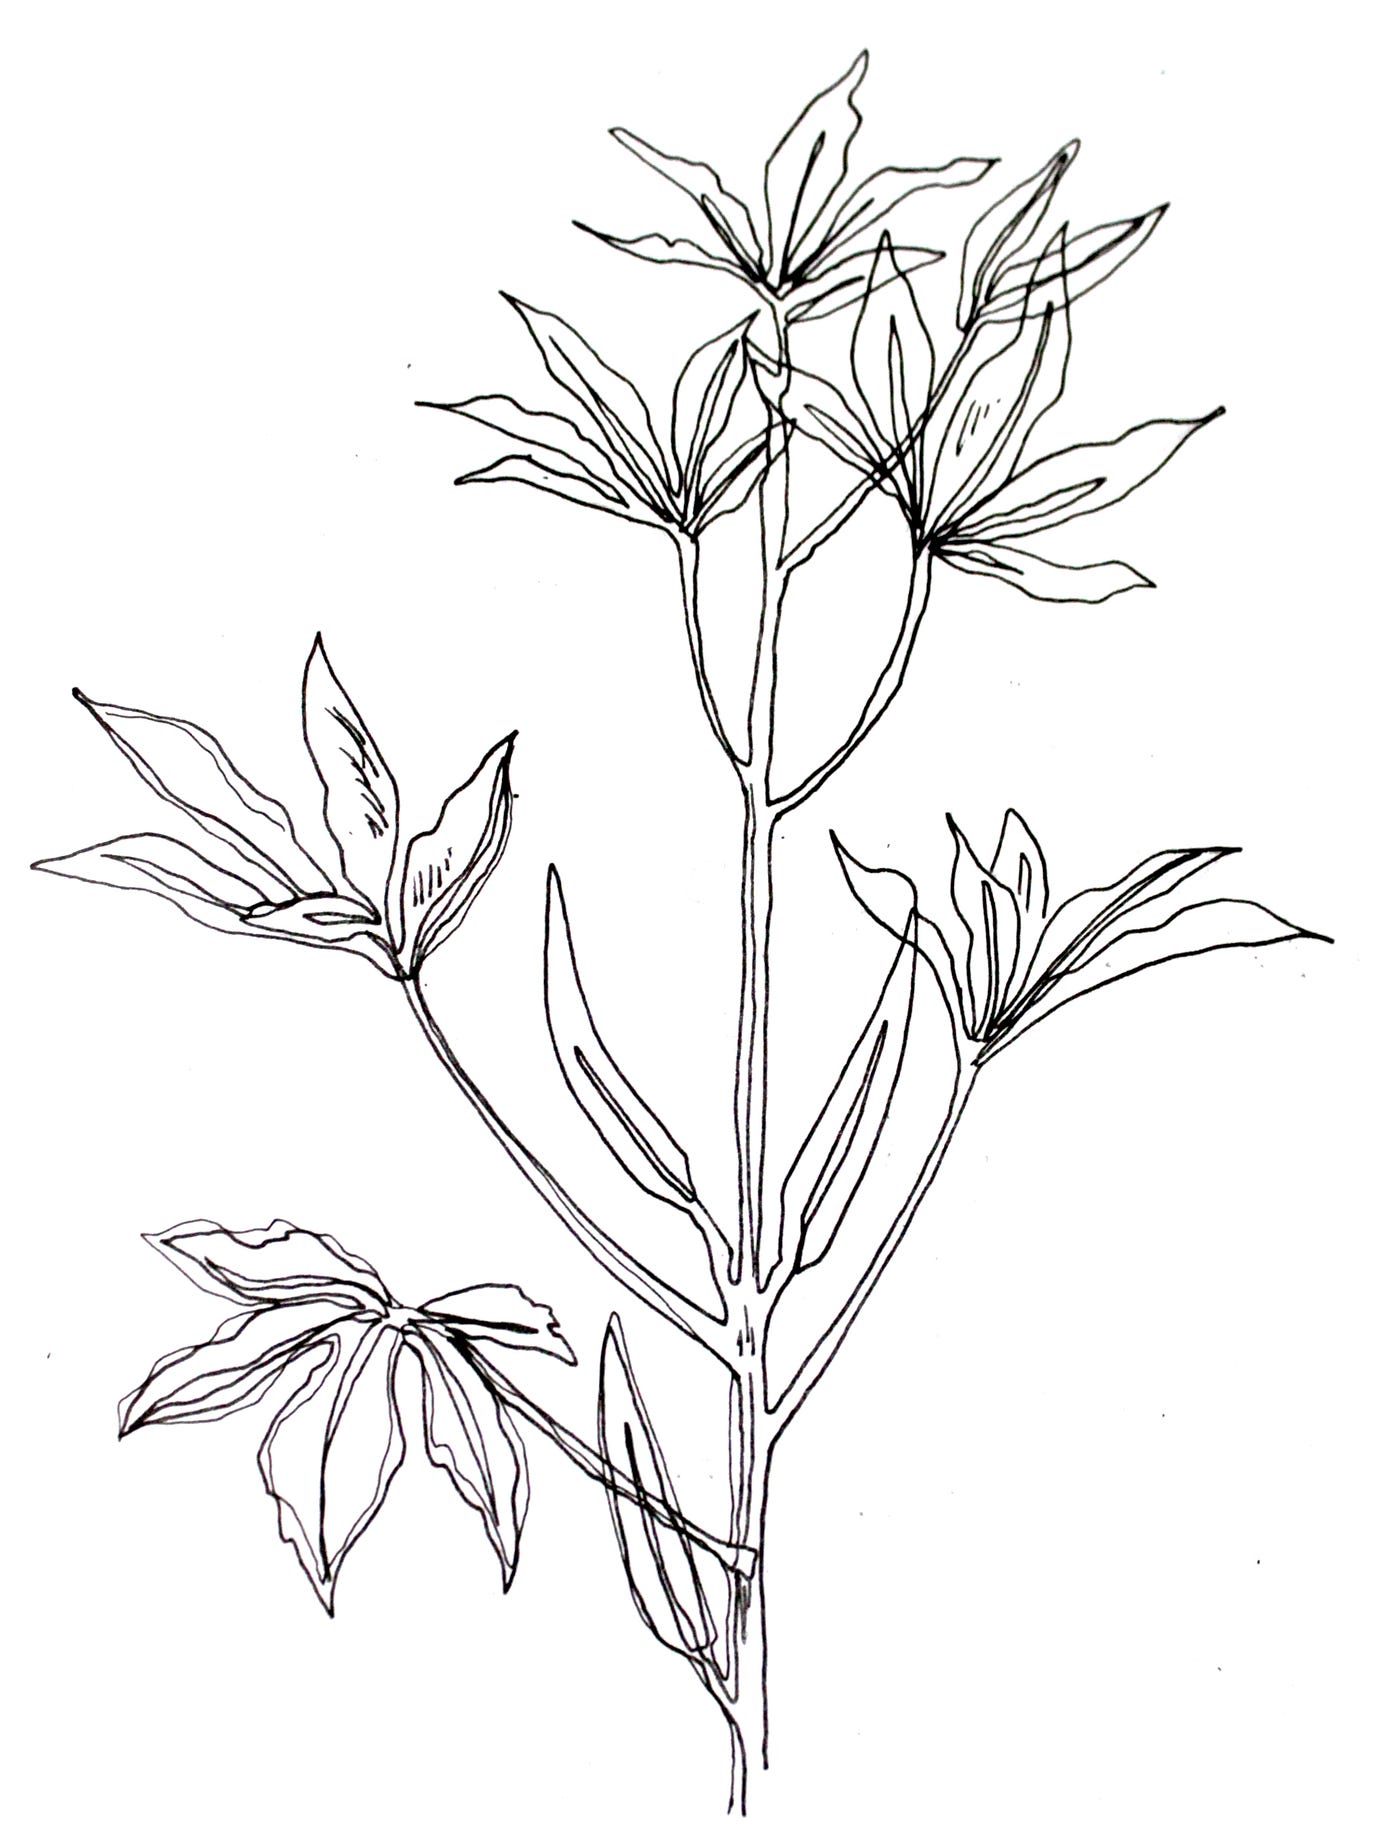 okra plant drawing